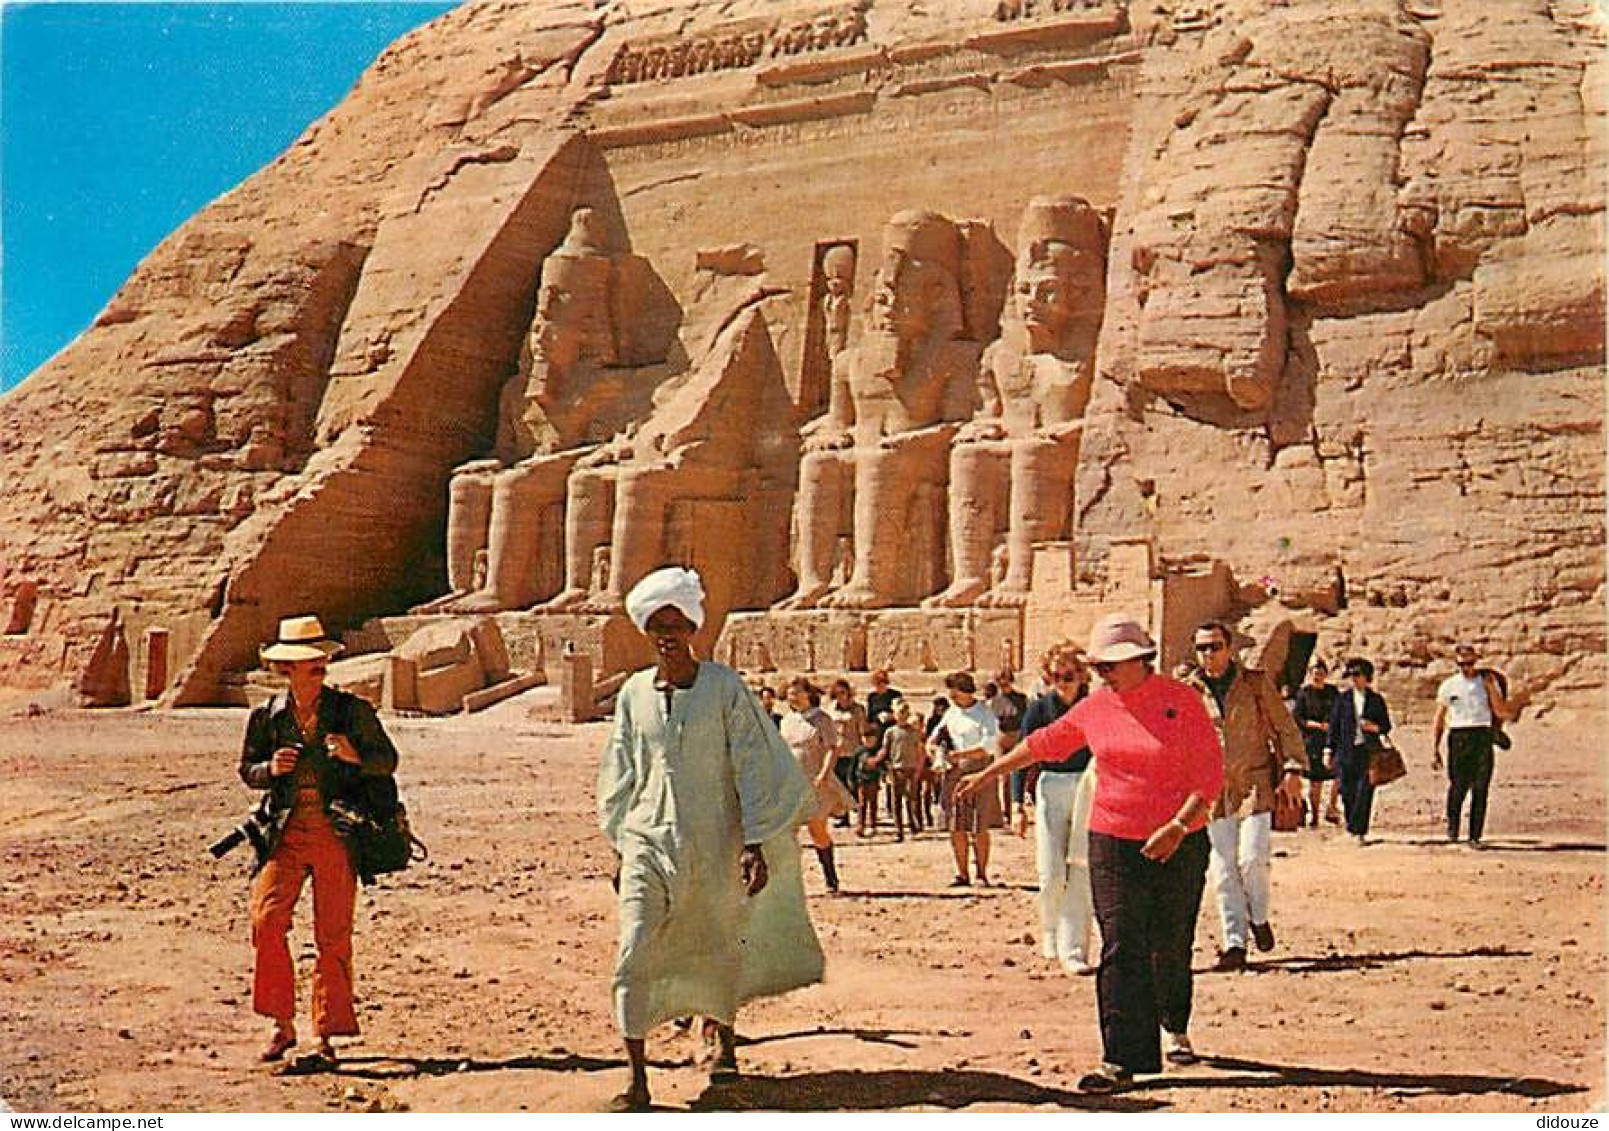 Egypte - Temples D'Abou Simbel - Abu Simbel - Abou Simbel Rock Temple Of Ramses II - Partial View Of The Gigantic Statue - Tempel Von Abu Simbel